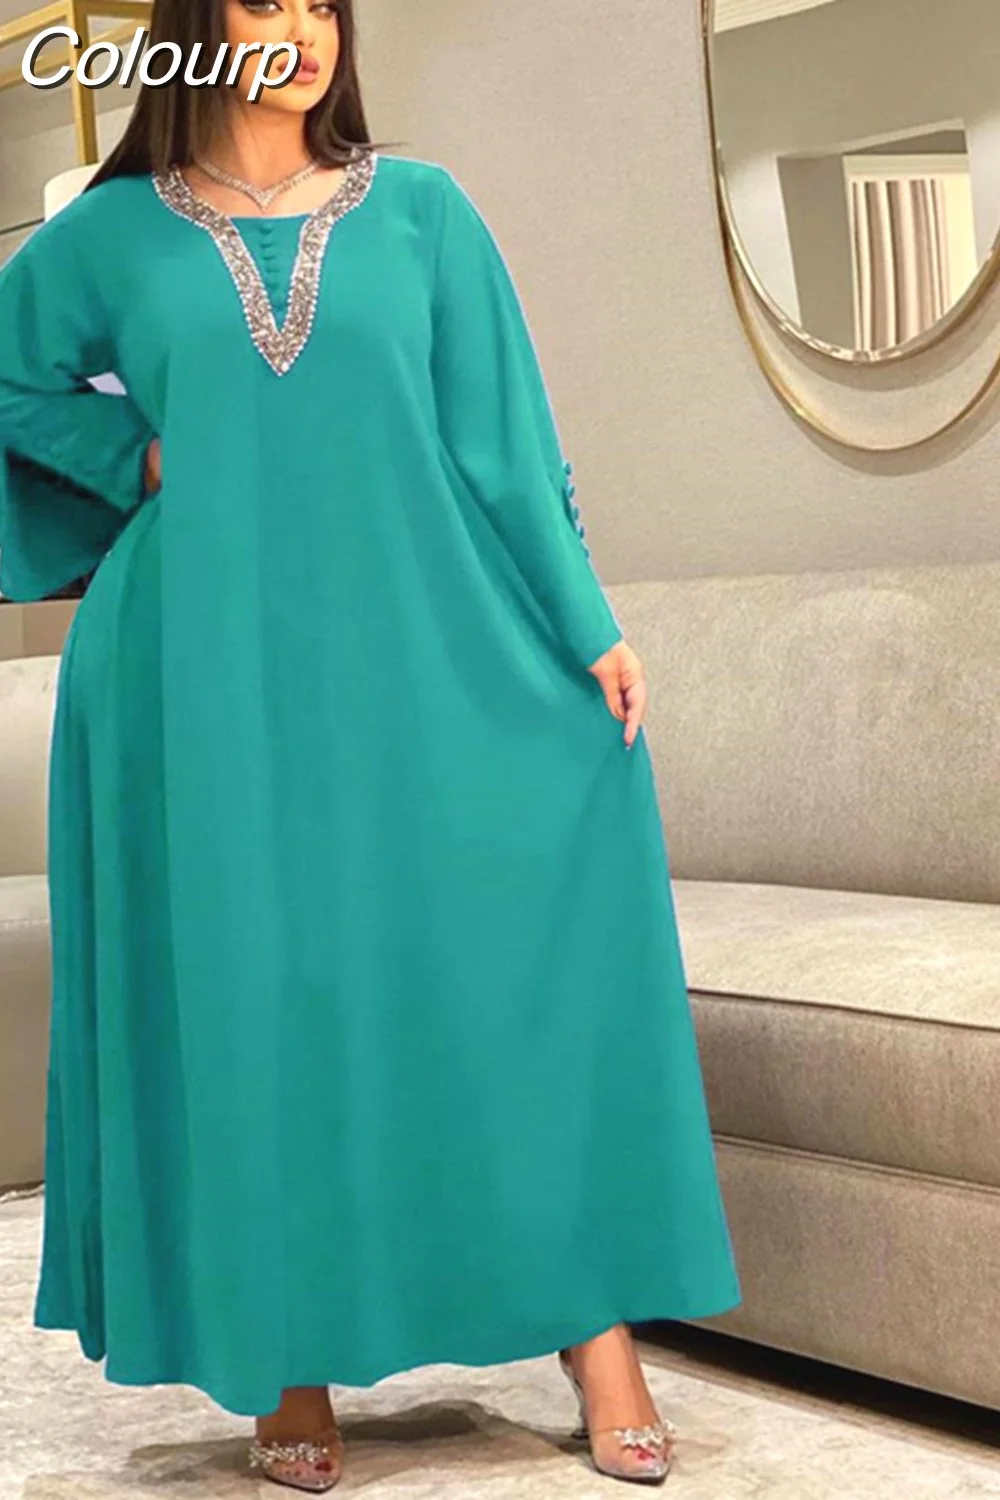 Colourp Dresses For Women Fashion Diamonds Button Decoration Long Sleeve Party Prom Dress Ramadan Muslim Women Clothing